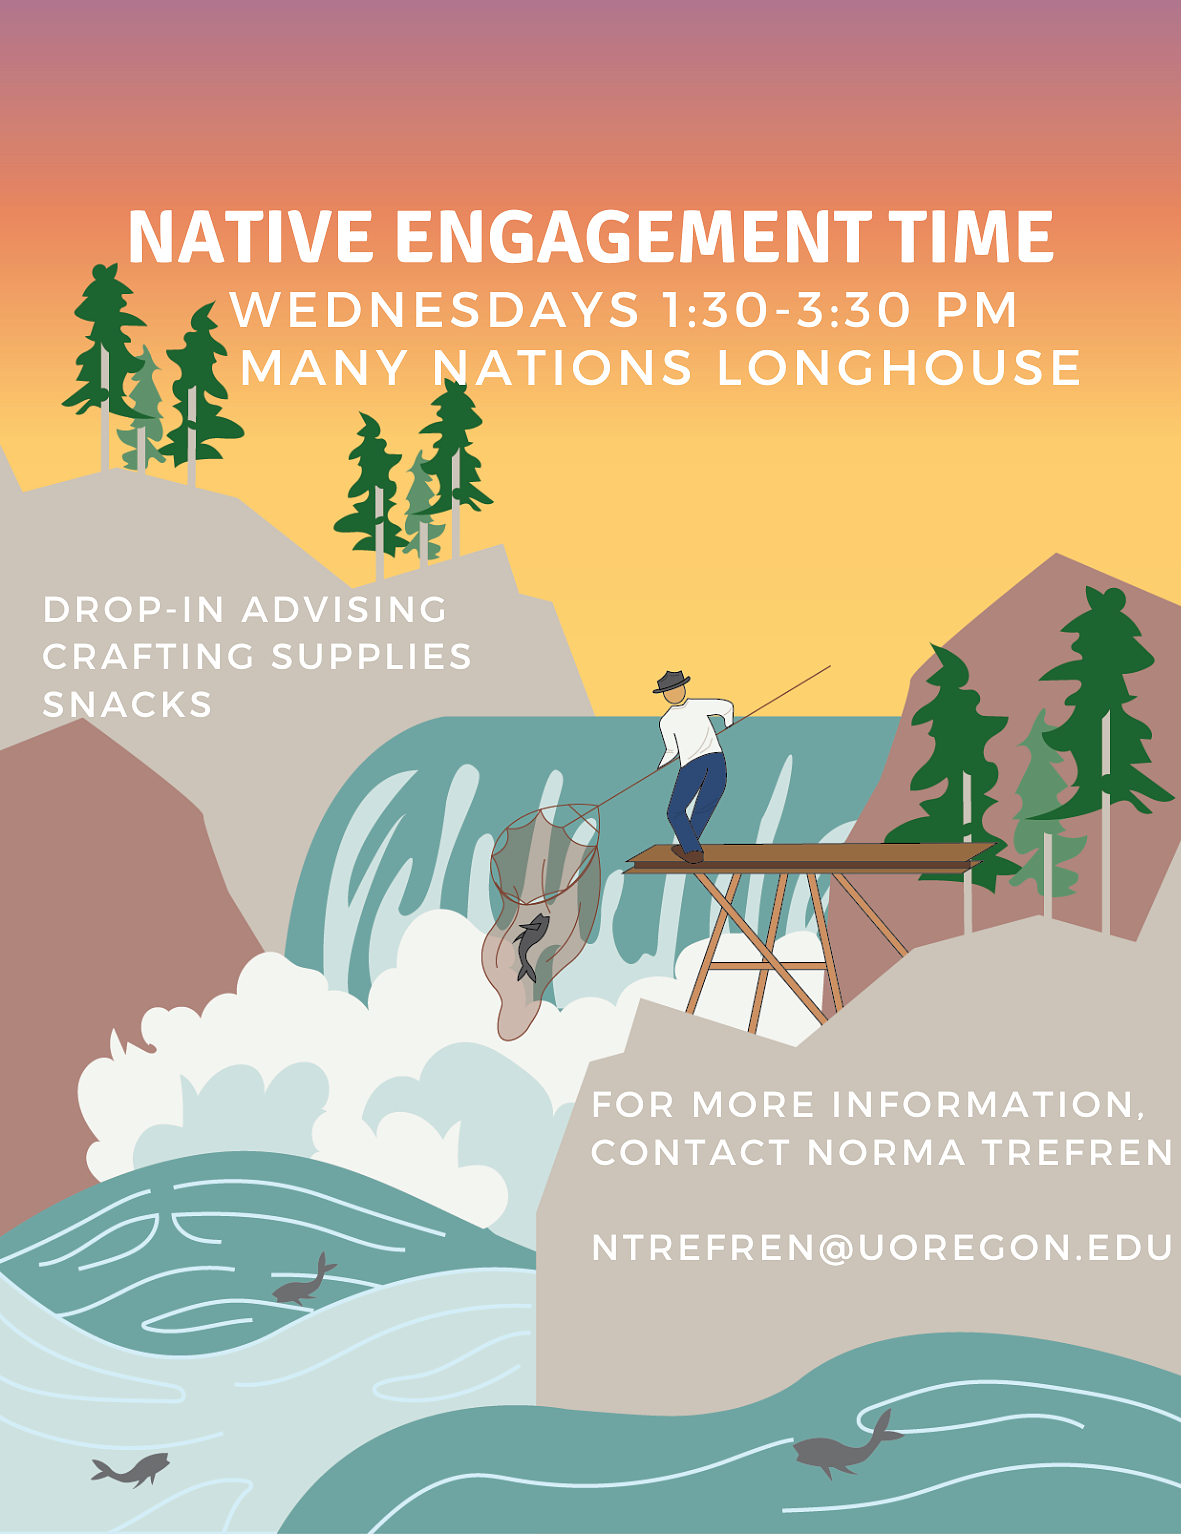 Graphic describing Native Engagement Time